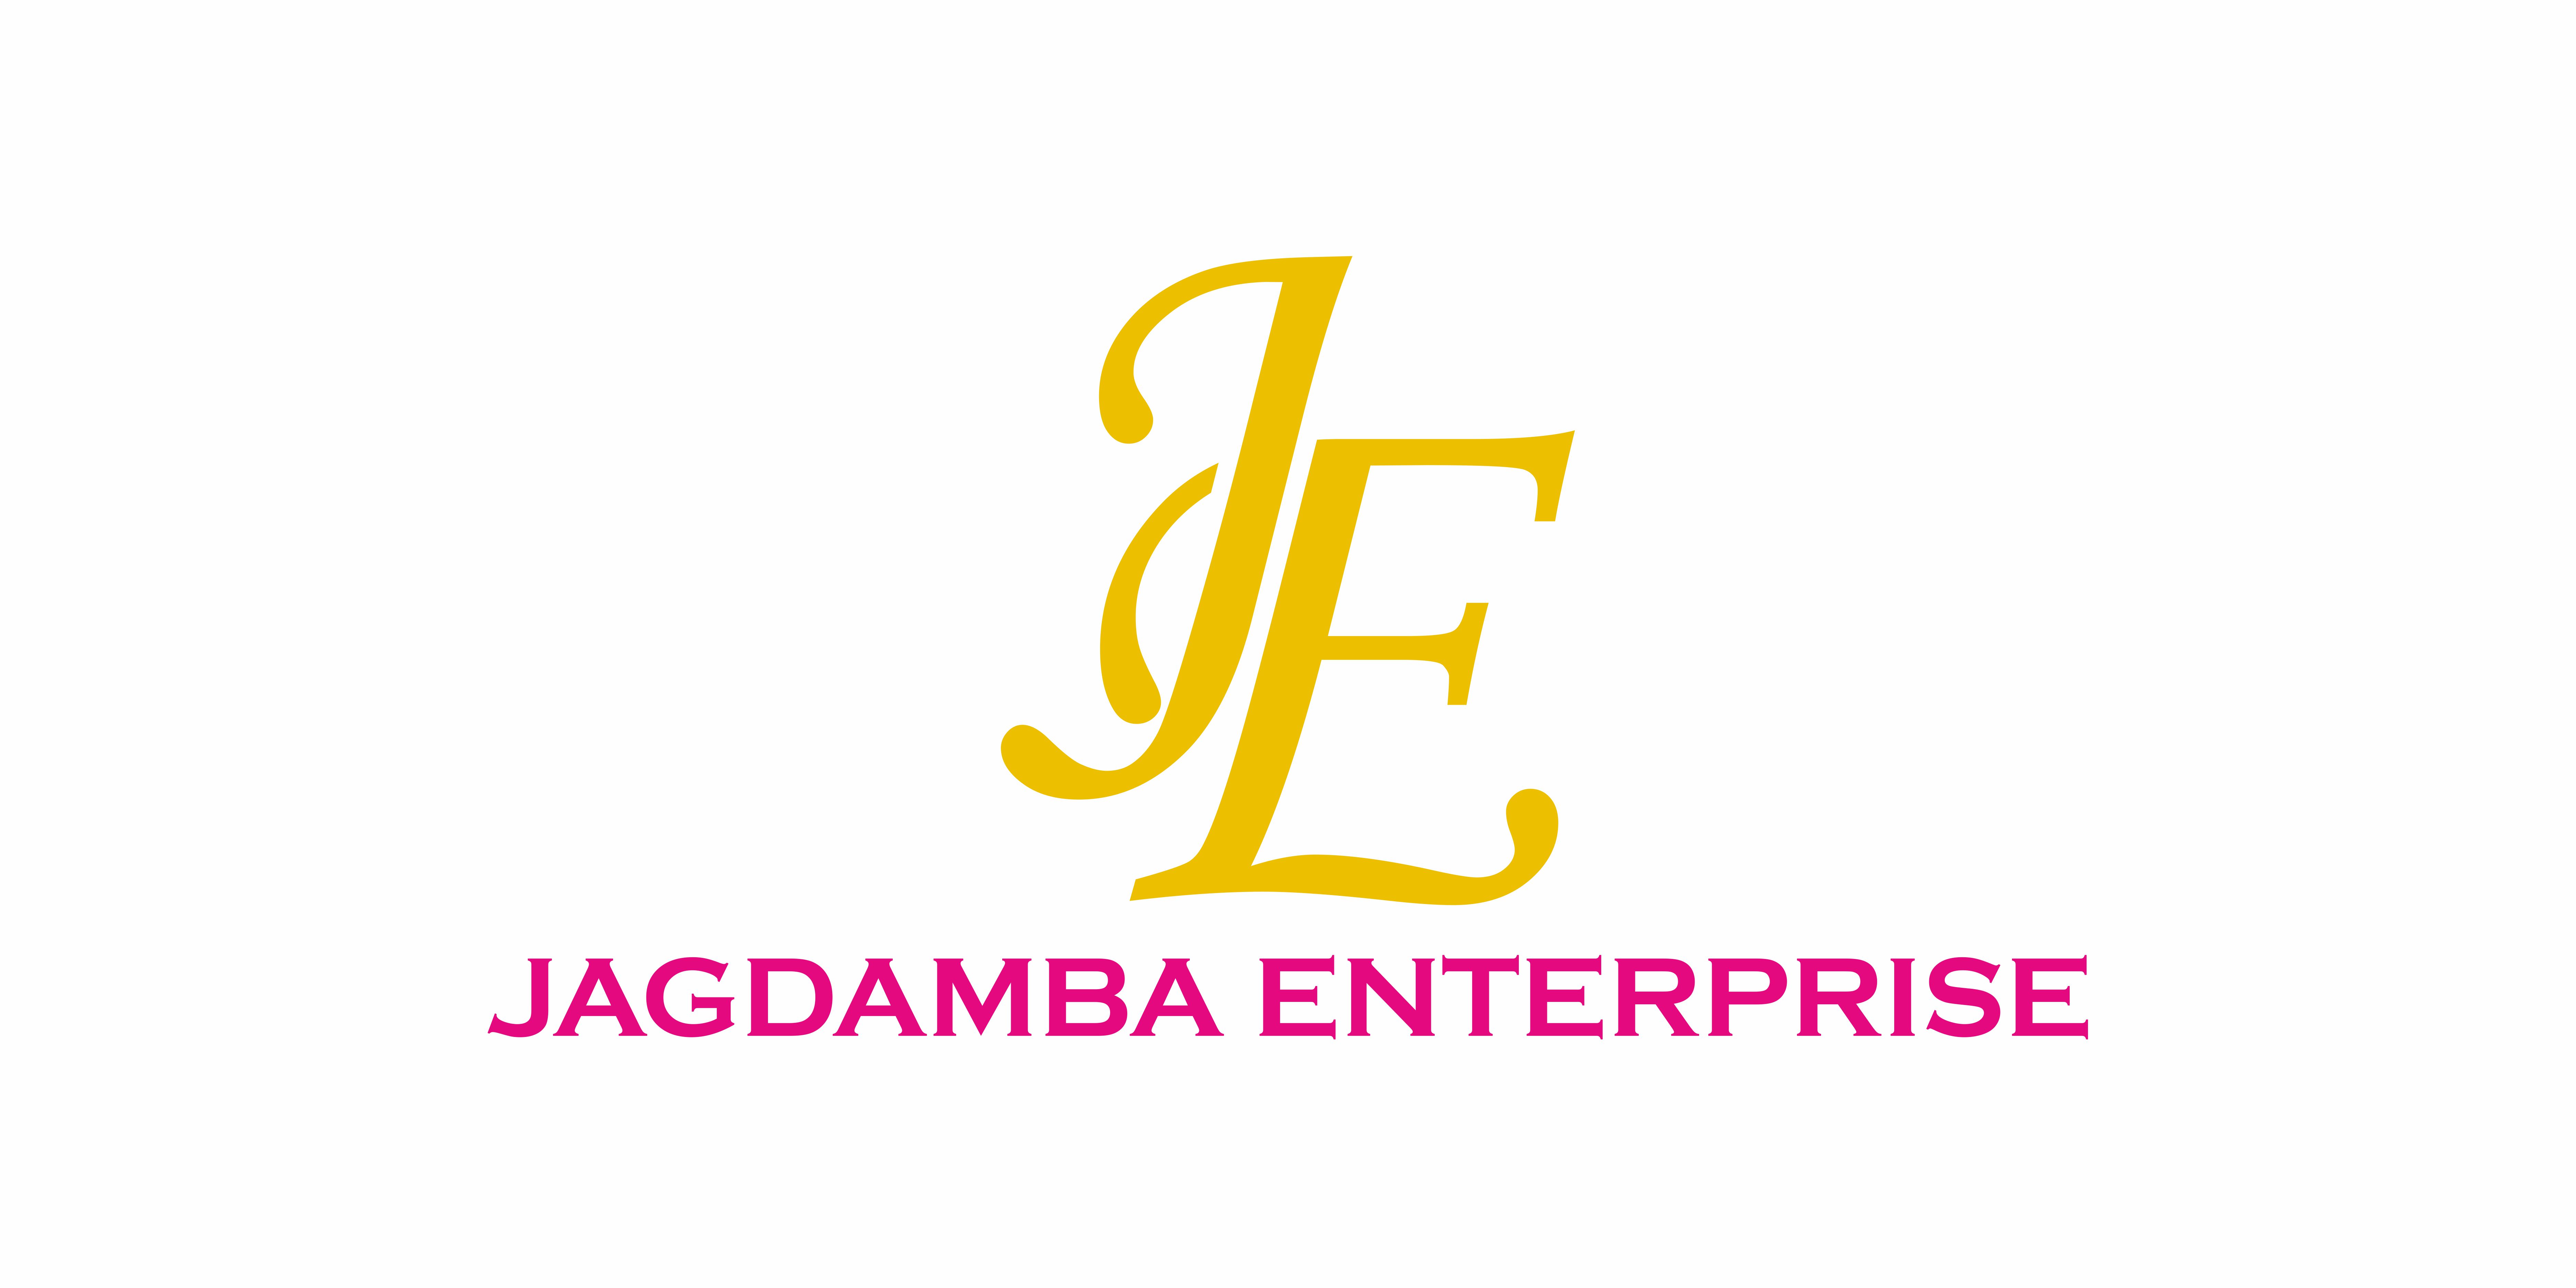 Jagdamba Enterprise